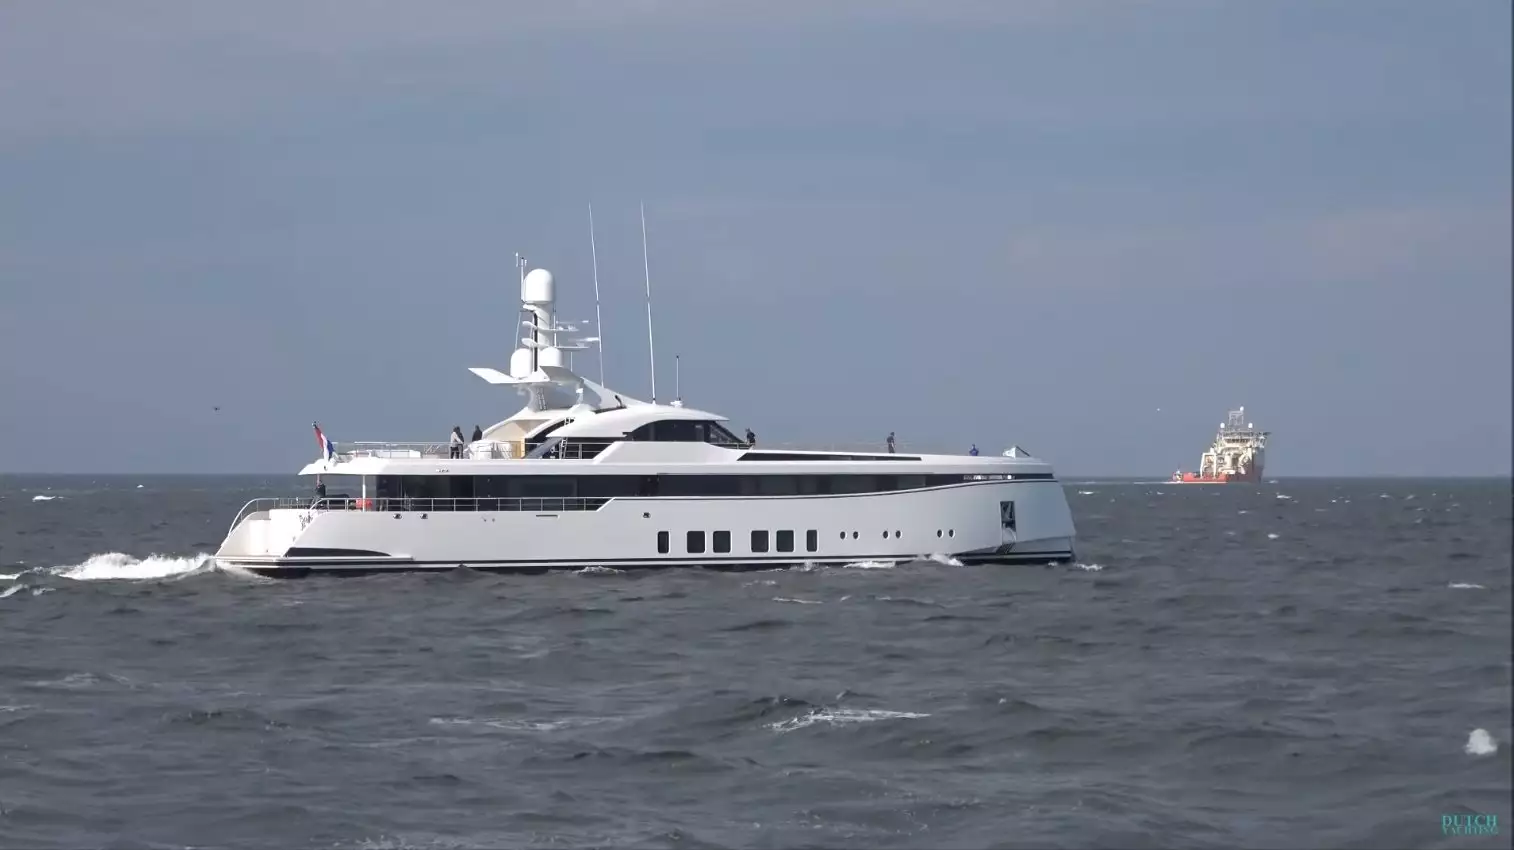 Yacht TOTALEMENT NUTS • Feadship • 2020 • propriétaire Sarkis Izmirlian